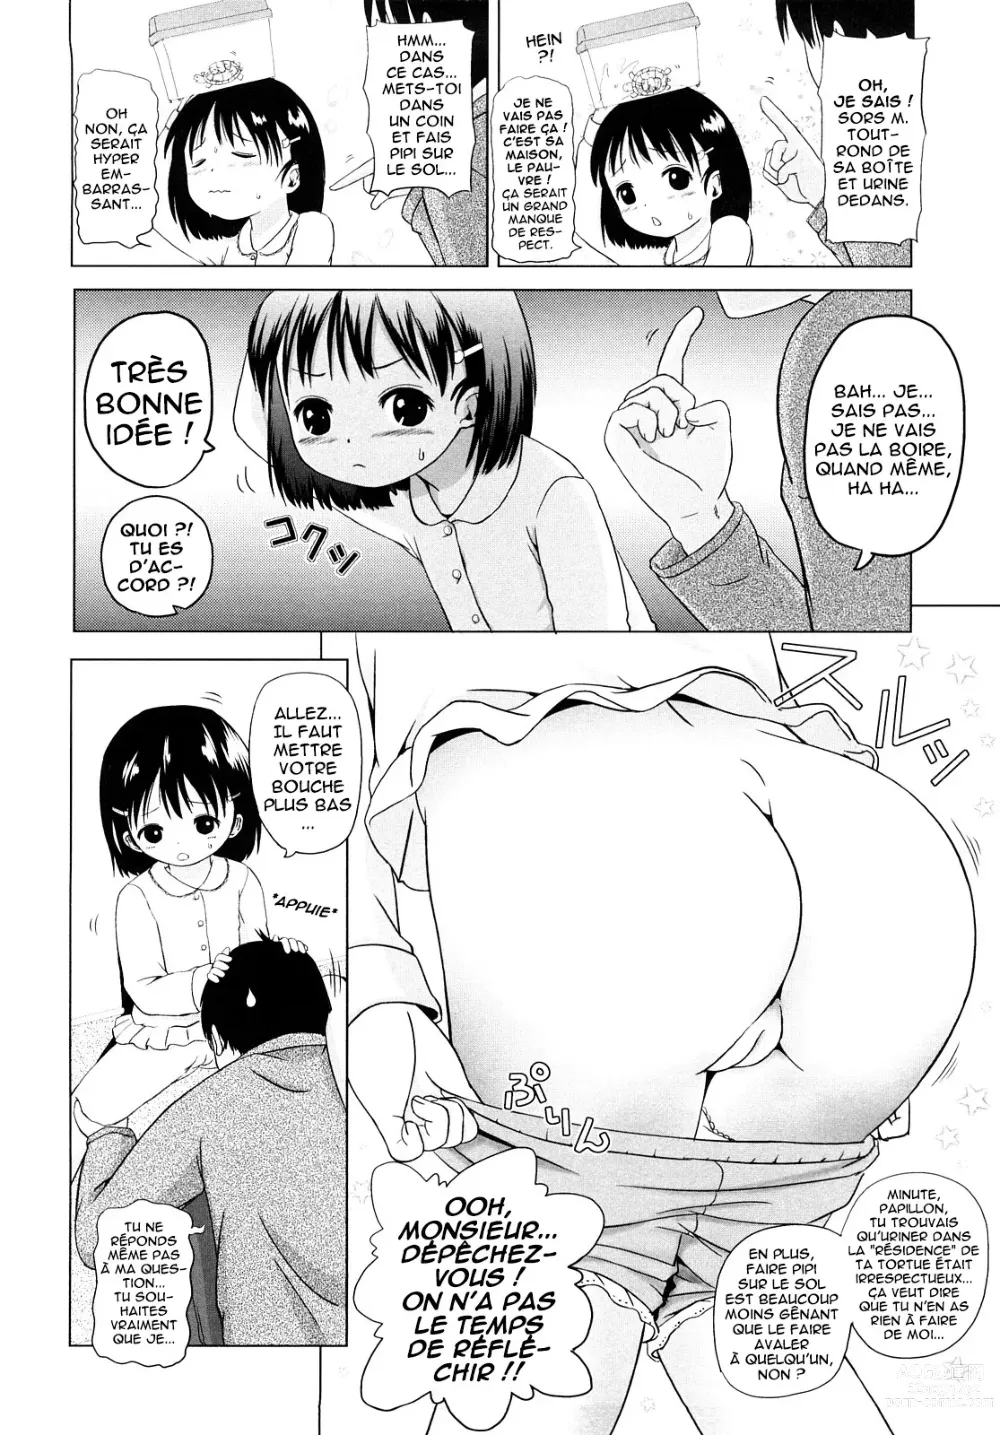 Page 4 of manga Elevator Action